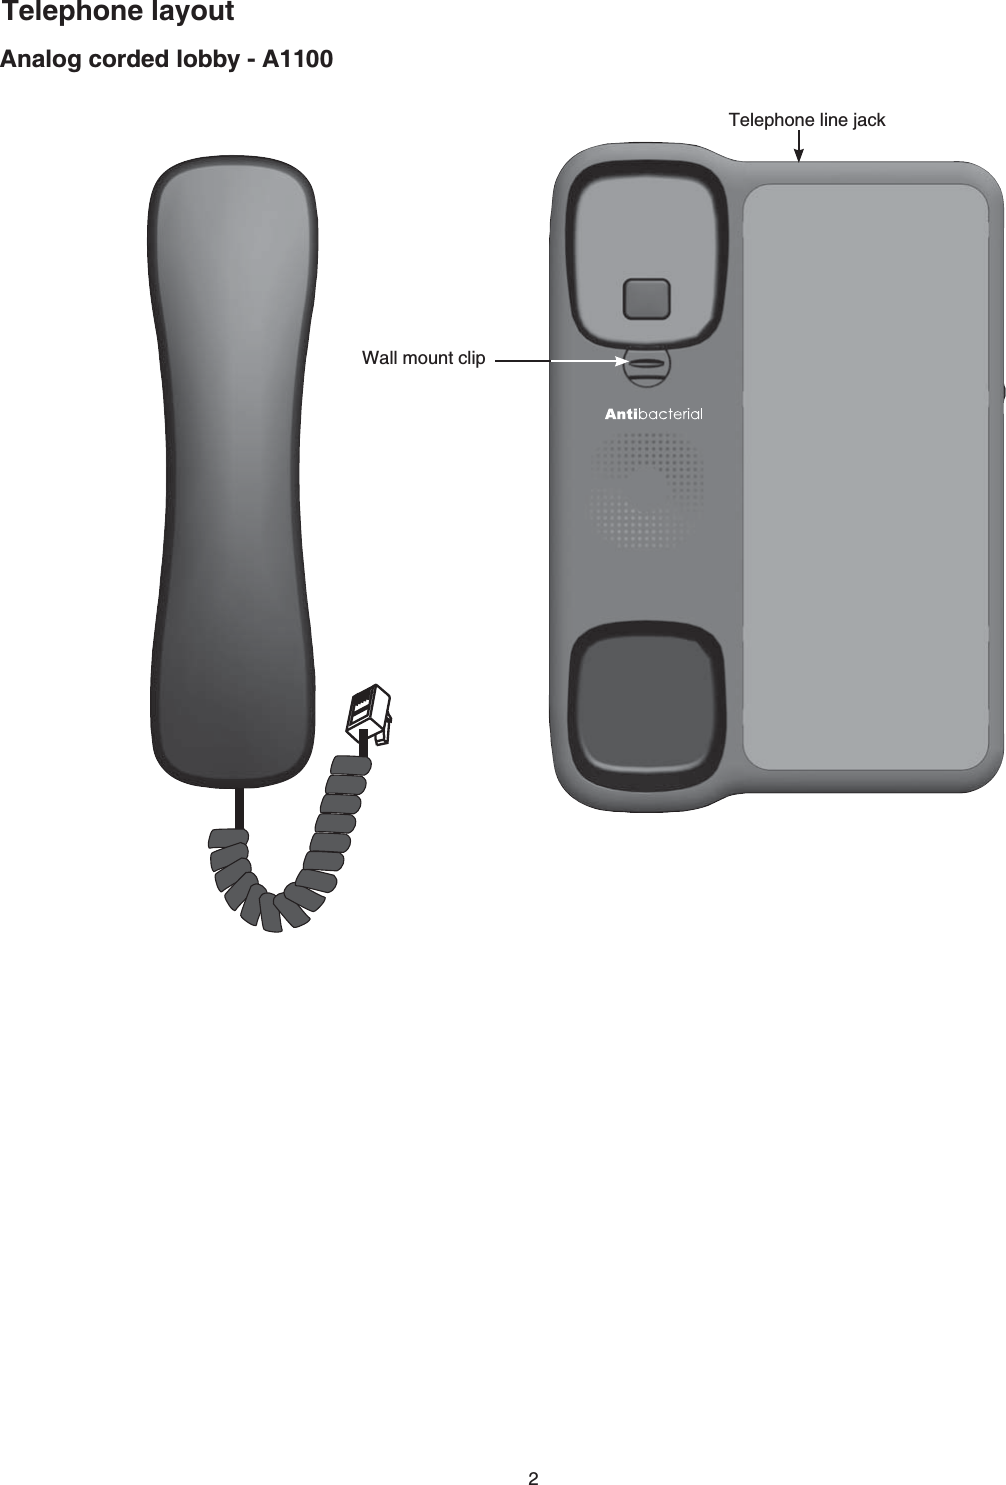 2Telephone layoutAnalog corded lobby - A1100Telephone line jackWall mount clip